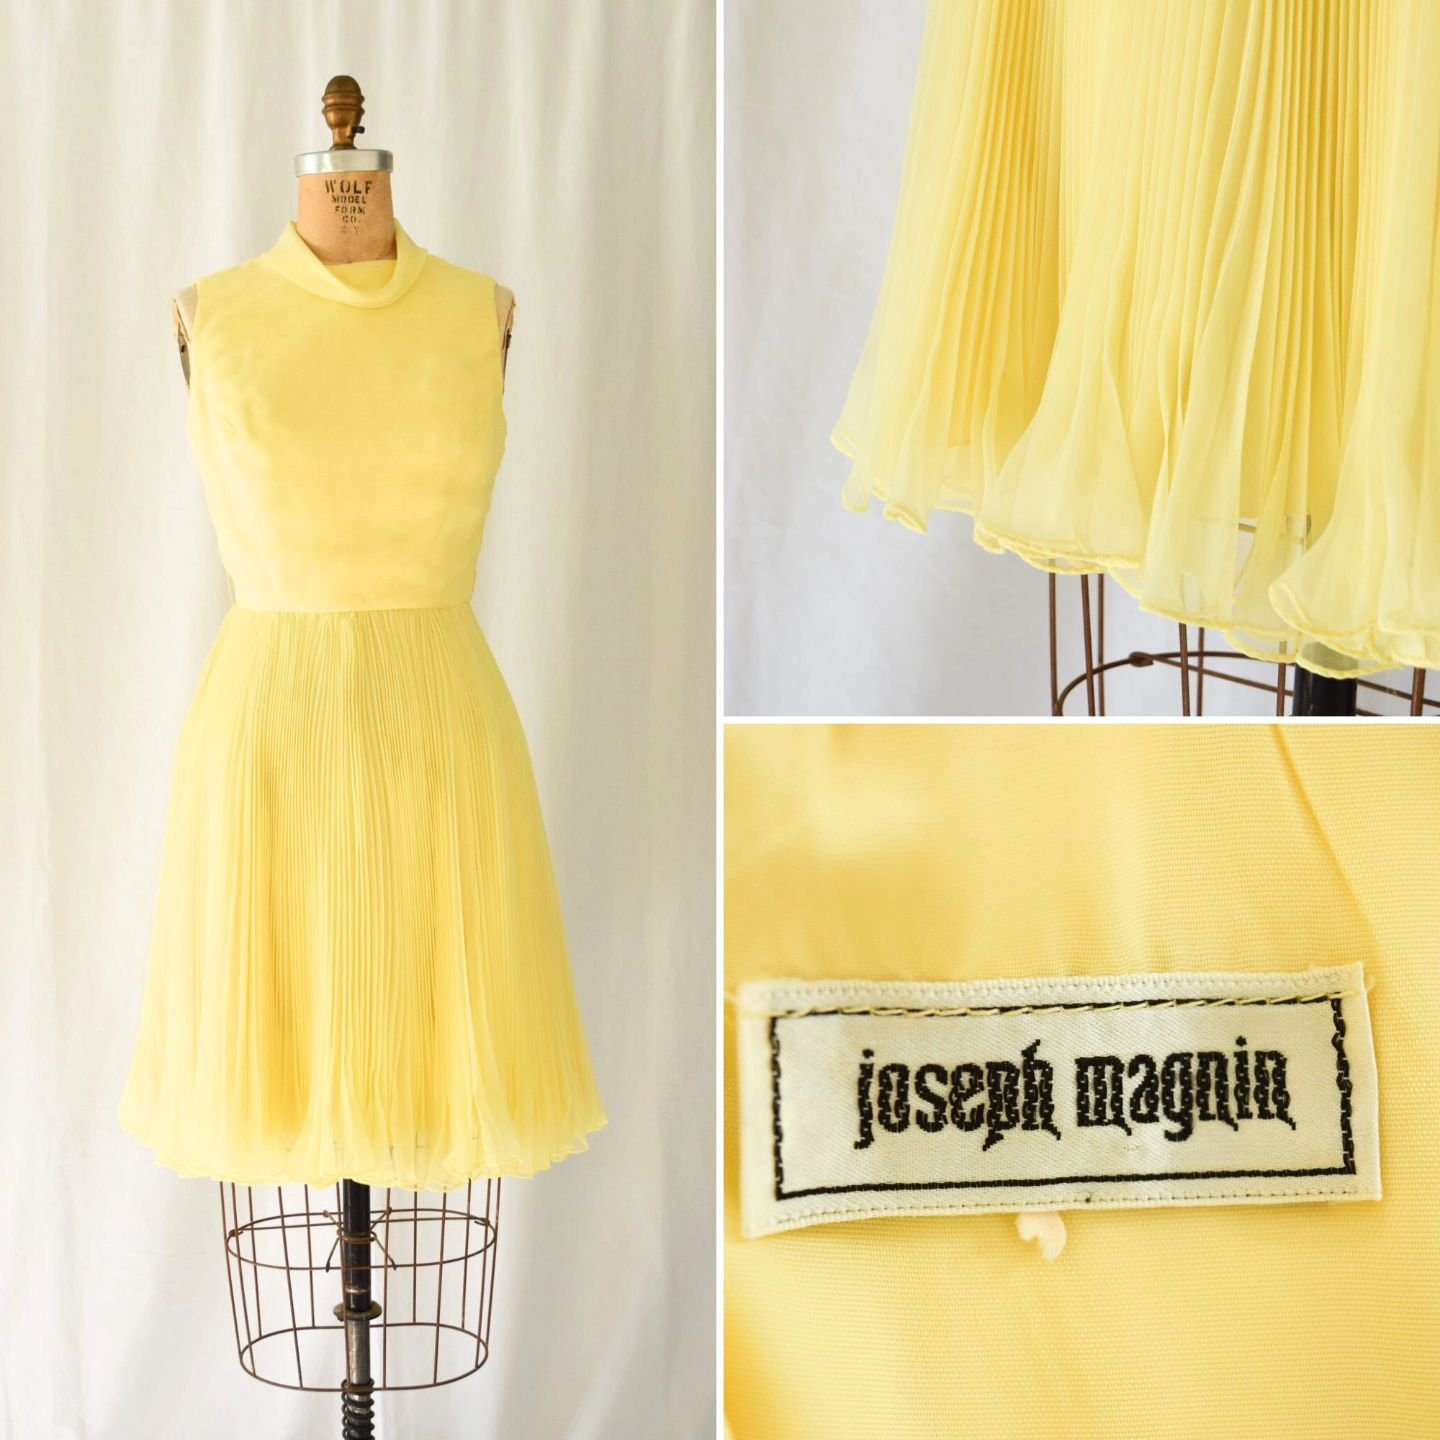 1960s sunshine yellow Joseph Magnin pleated dress... available on the website. 
.
#vintagefashion #vintagedress #josephmagnin #vintageshopping